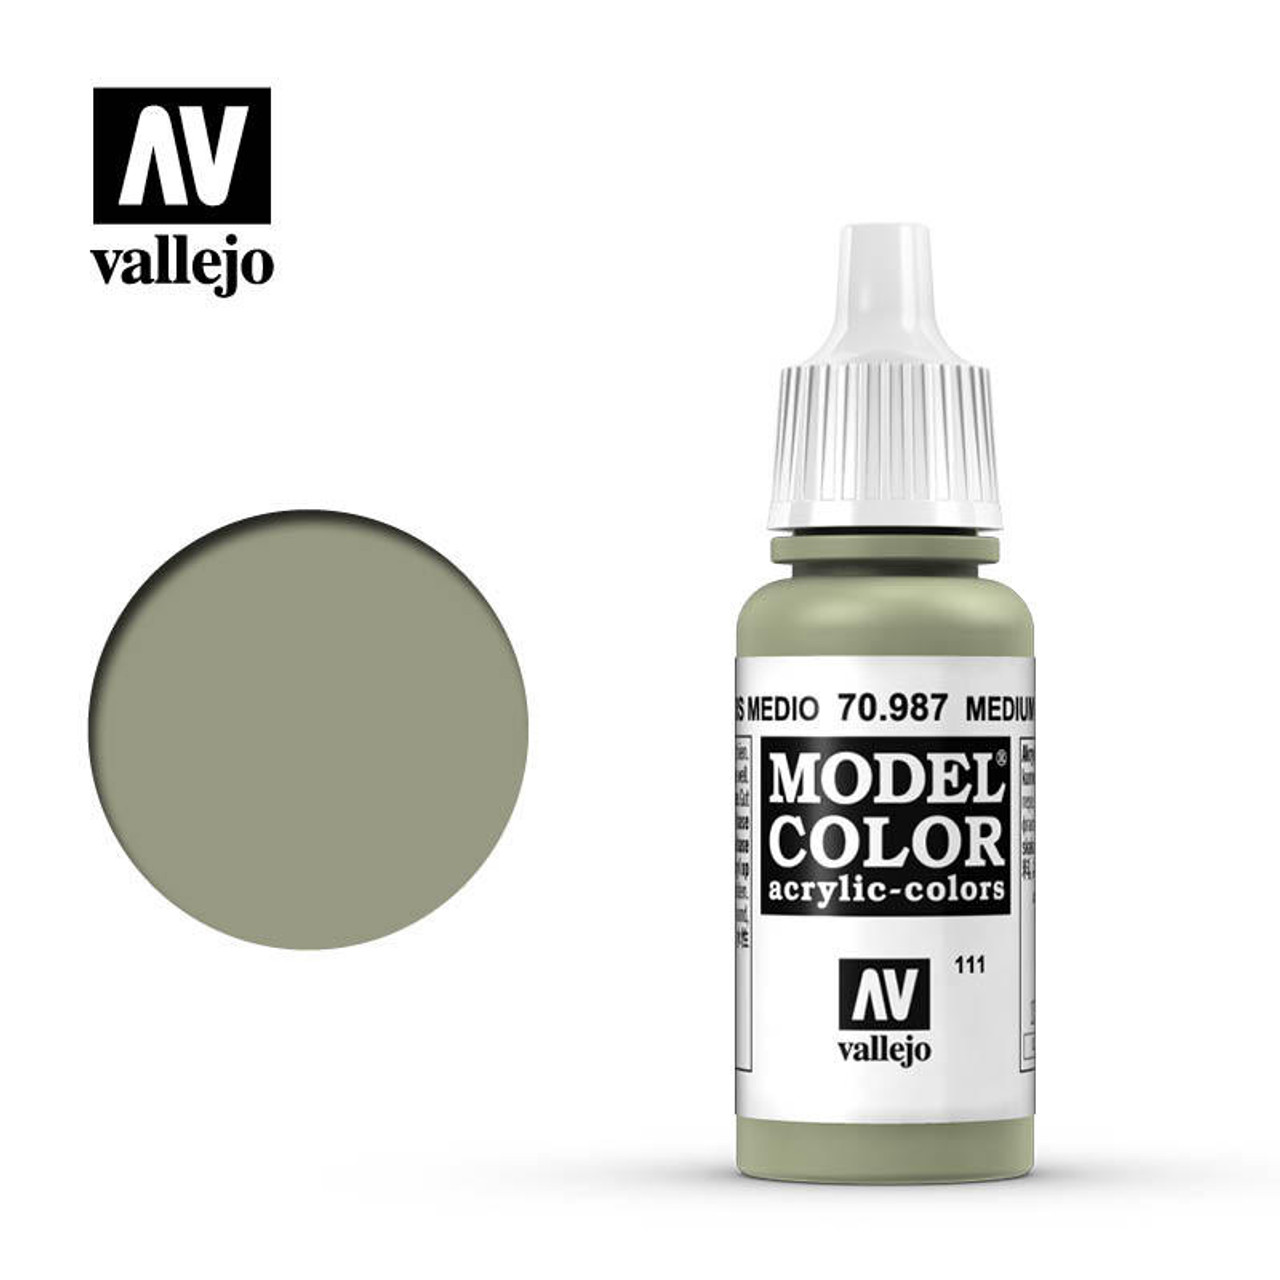 Vallejo Model Color Acrylic Hobby Paints / Mediums / Glazes: 17ml Bottles